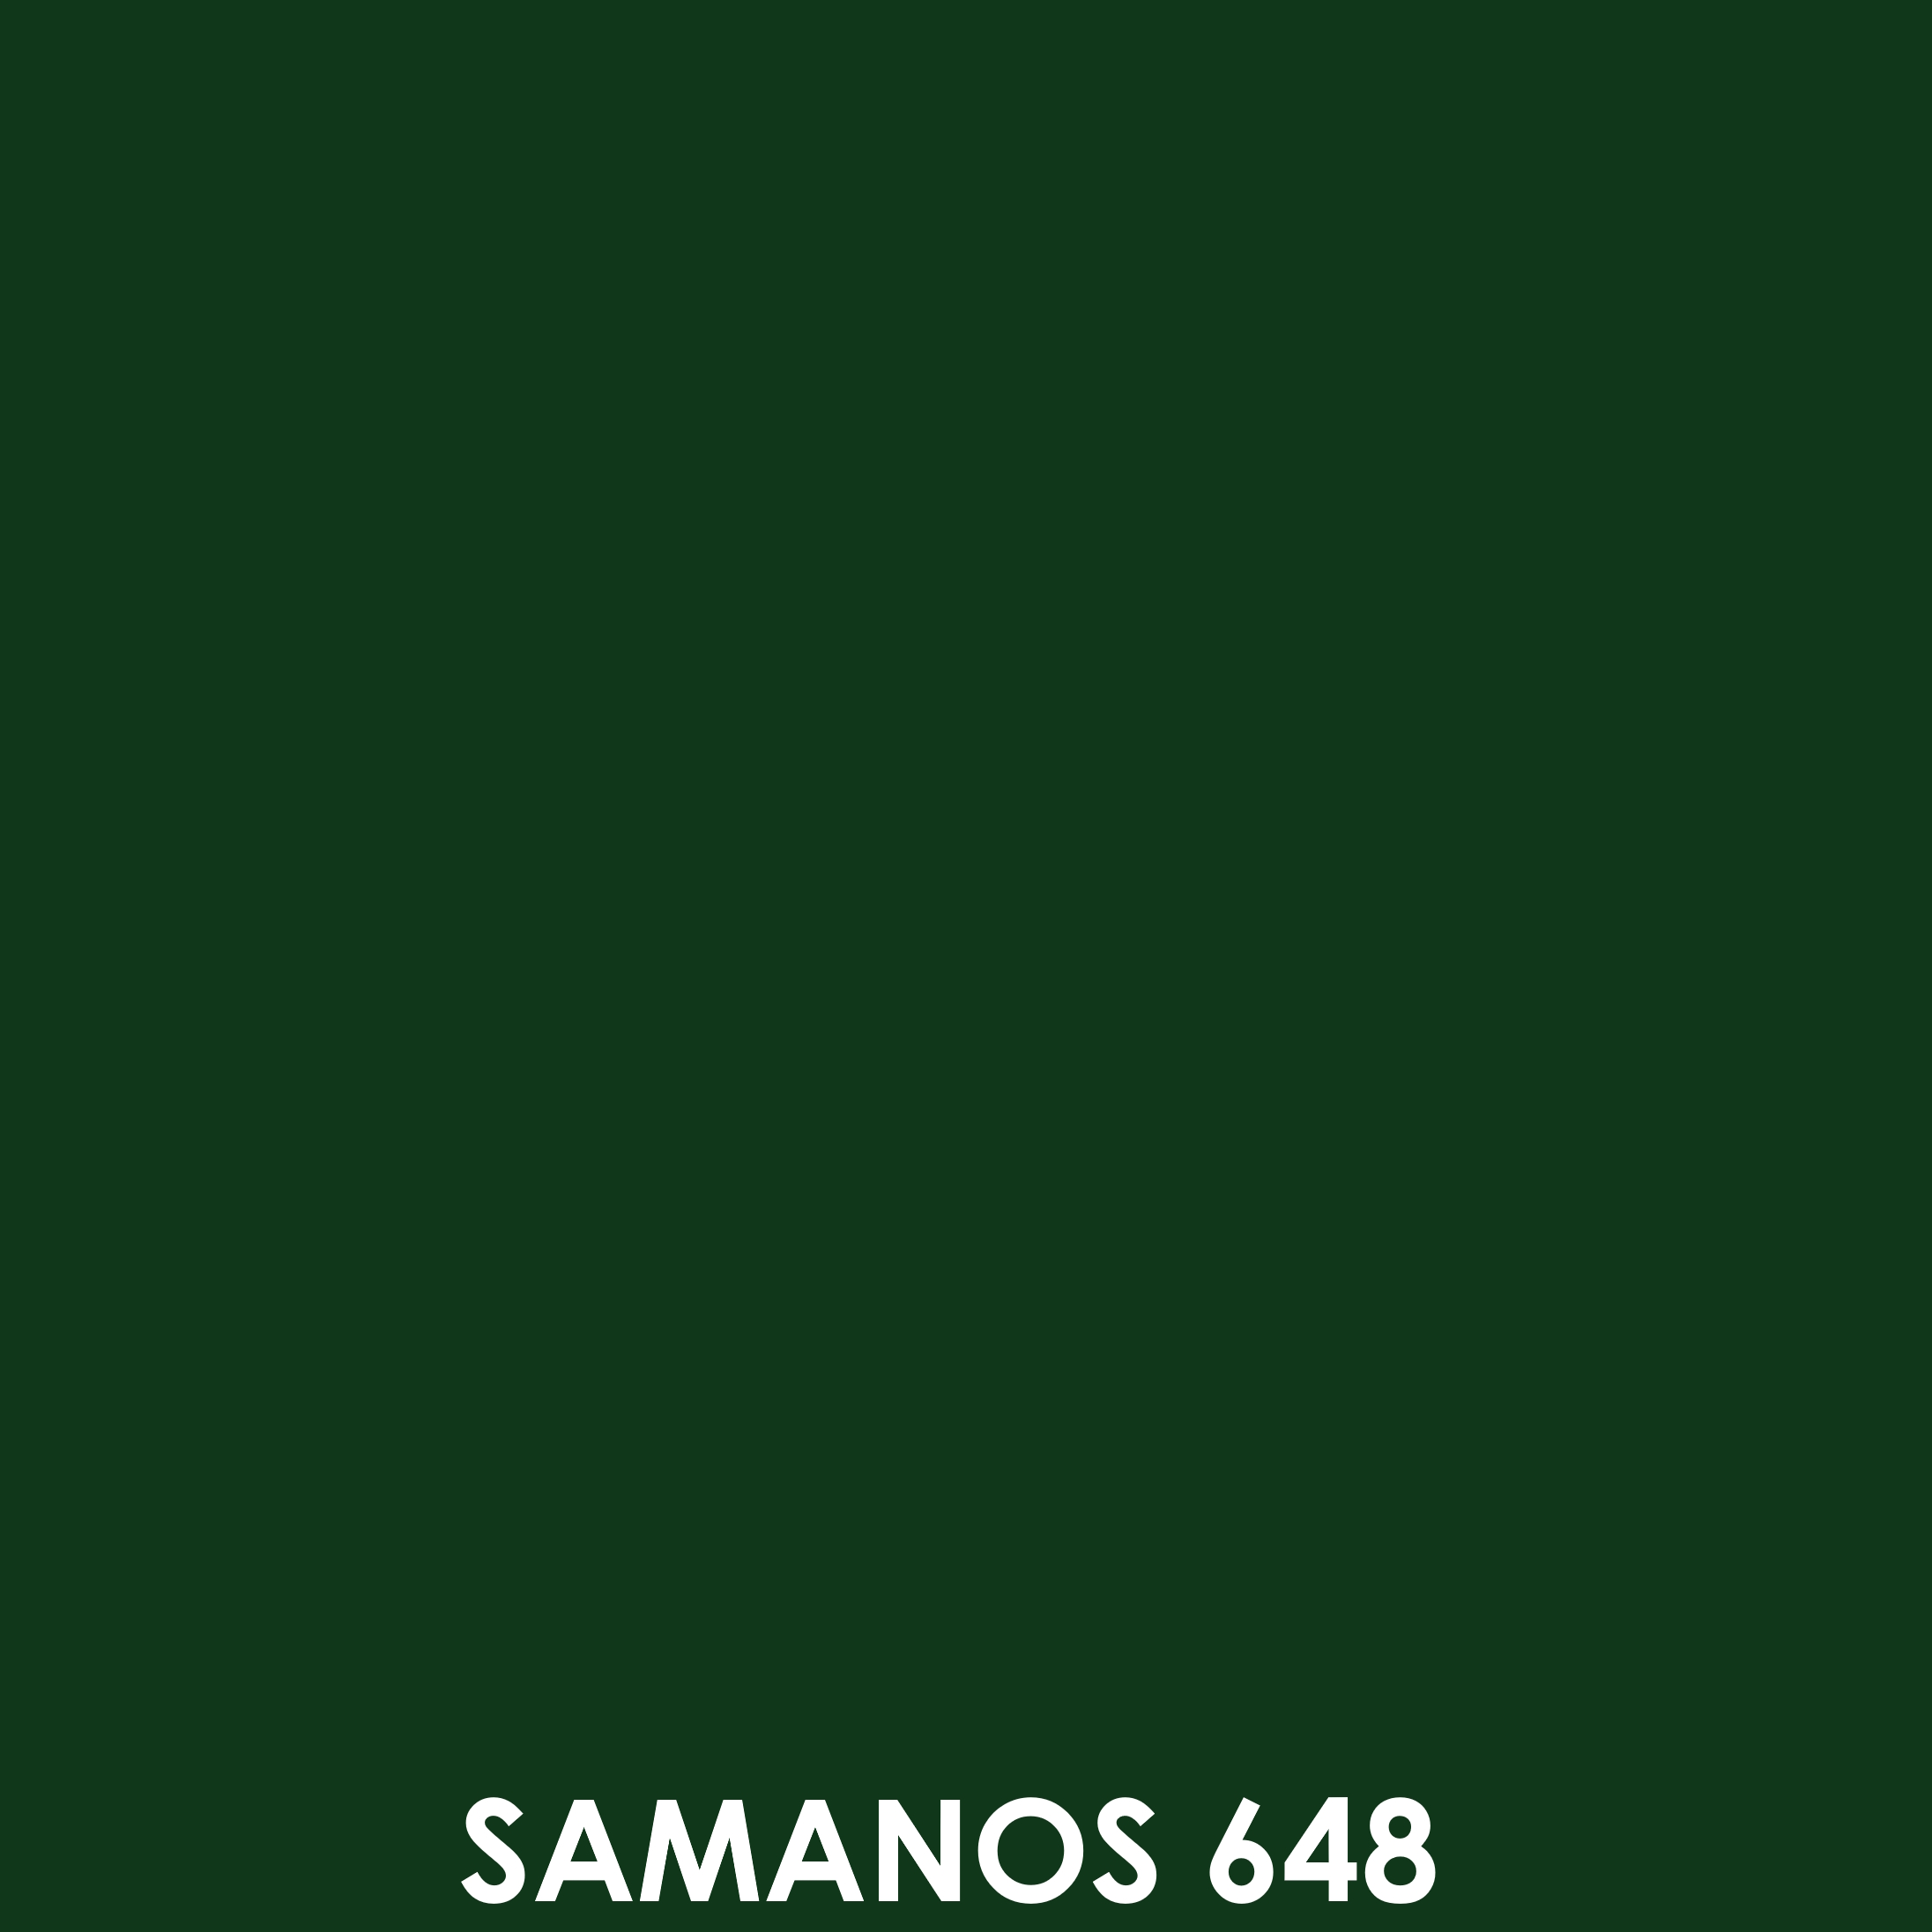 Samanos 